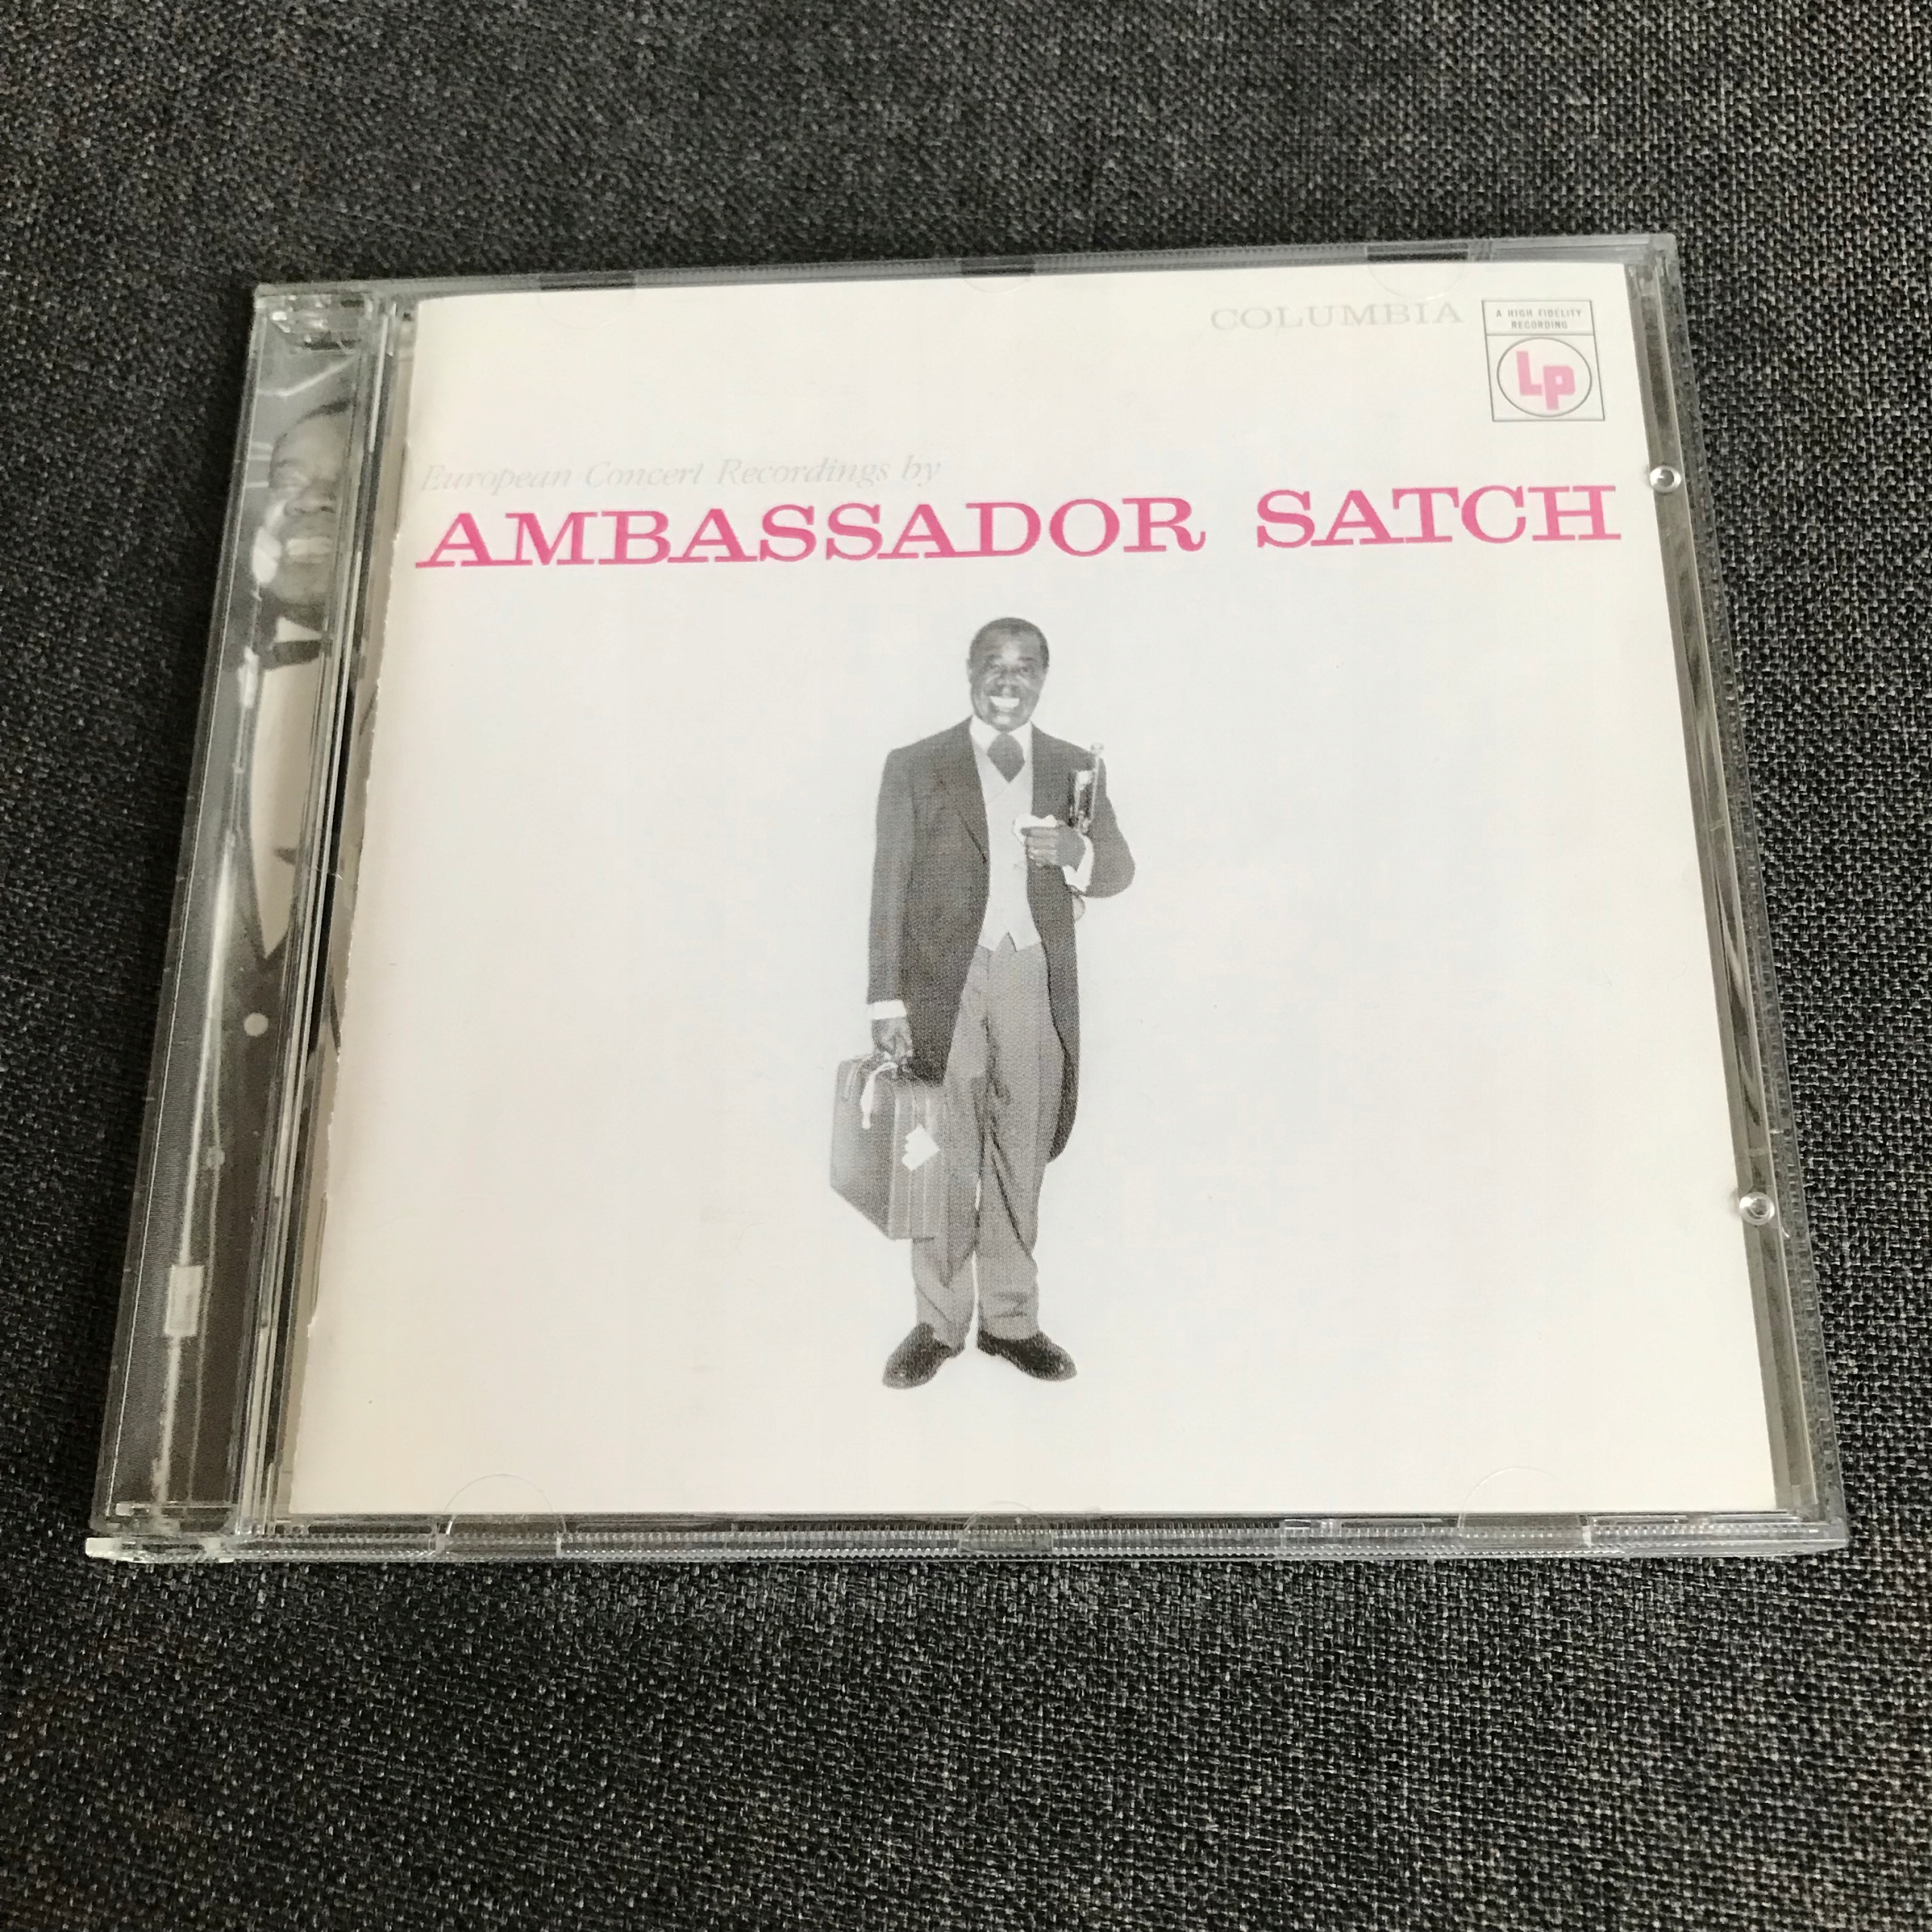 LOUIS ARMSTRONG SIGNED AMBASSADOR SATCH RECORD ALBUM